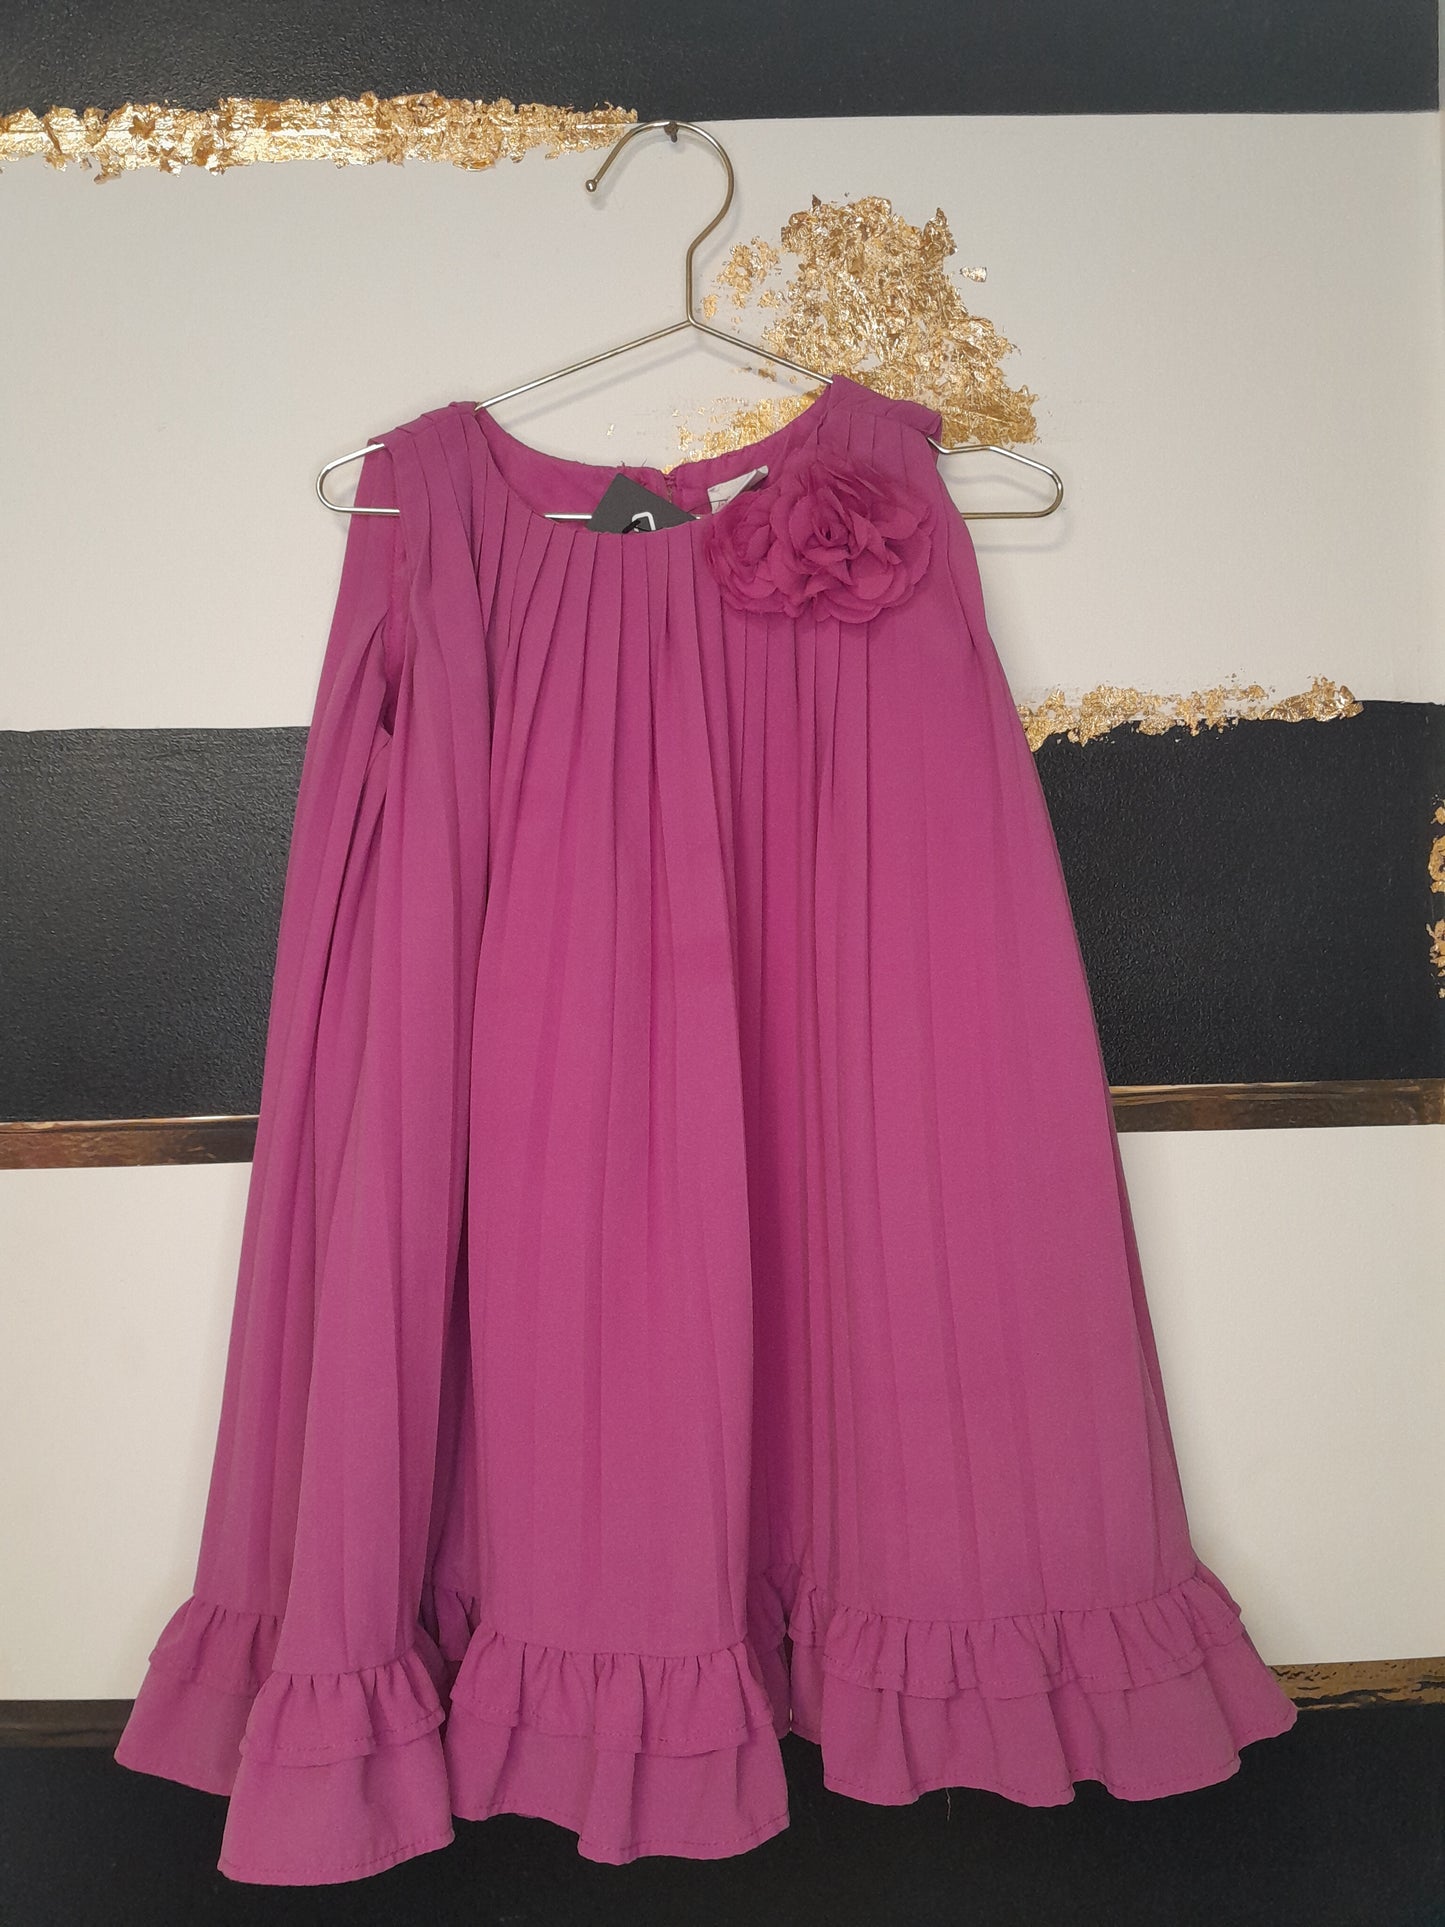 Gymboree Purple Dress